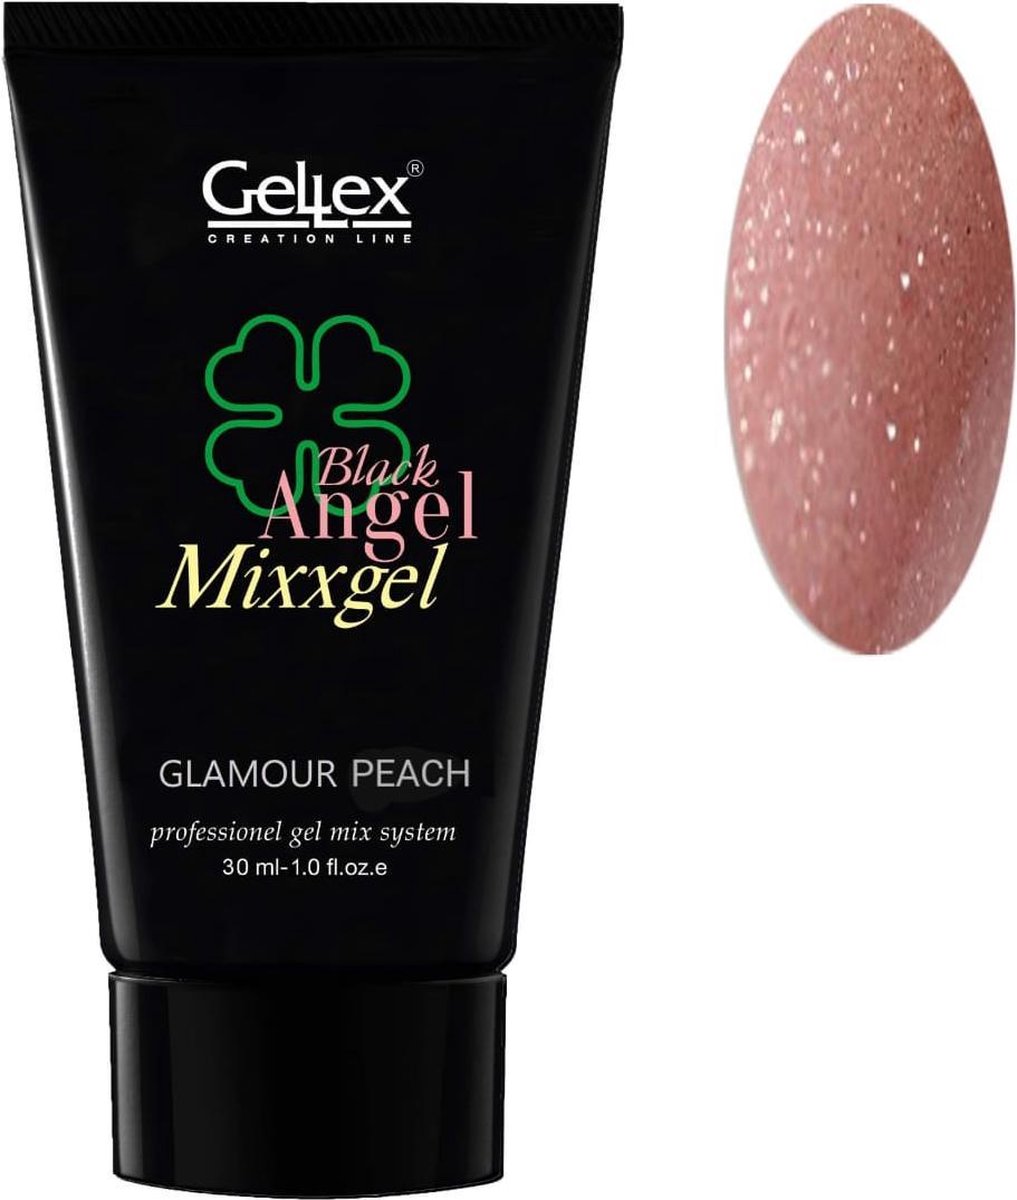 Black Angel Mixxgel, Polyacryl gel, Glamour Peach 30ml